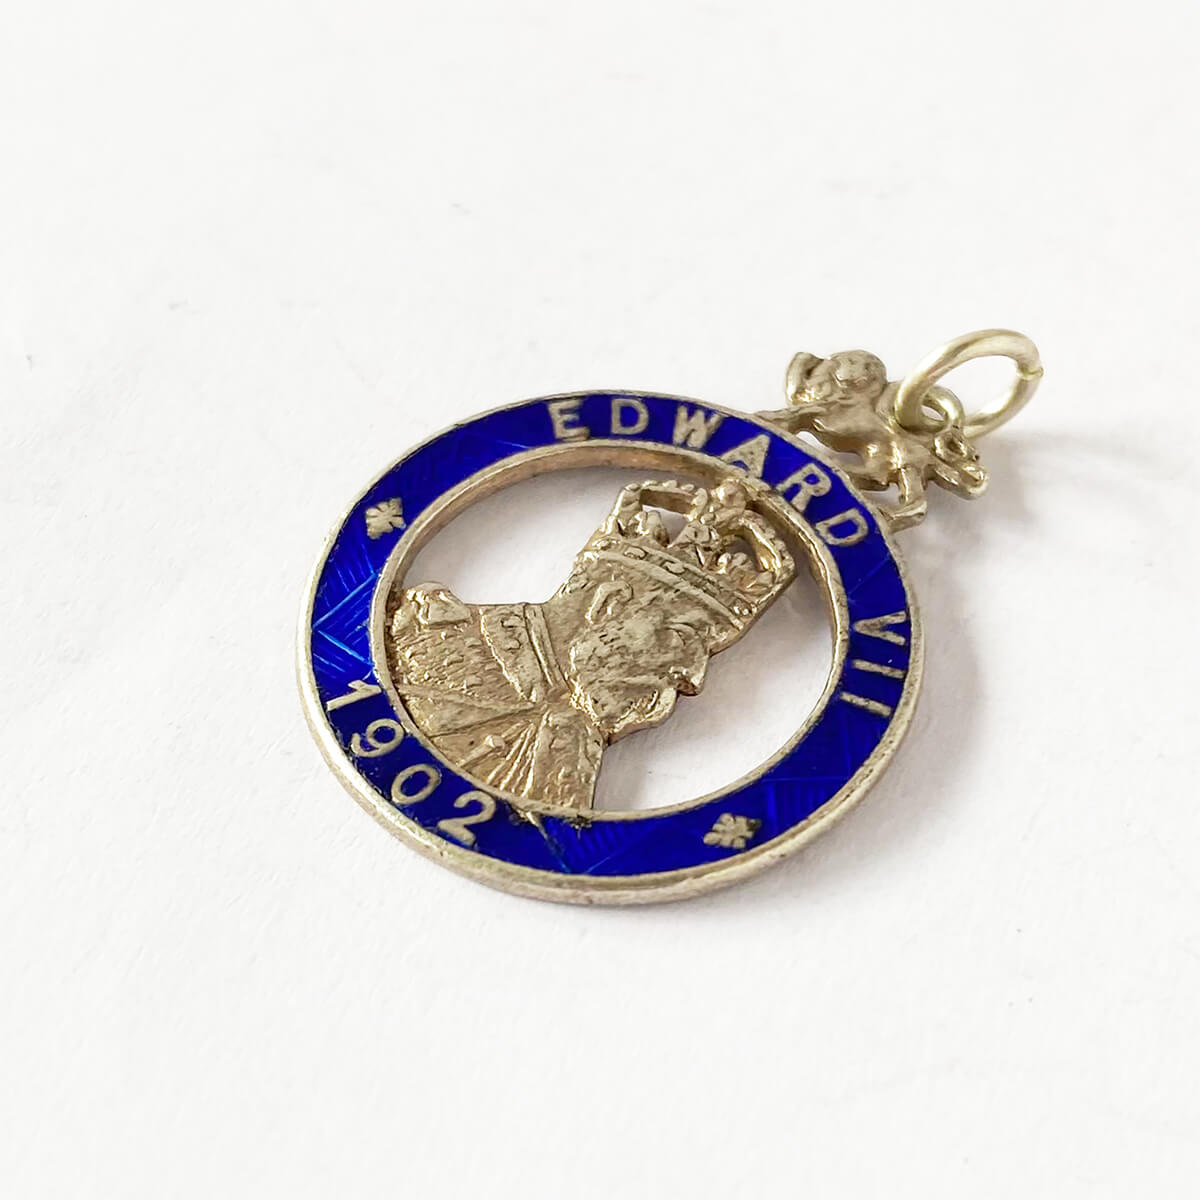 King Edward VII coronation 1902 souvenir charm by Charles Horner English silver and blue enamel Charmarama Charms